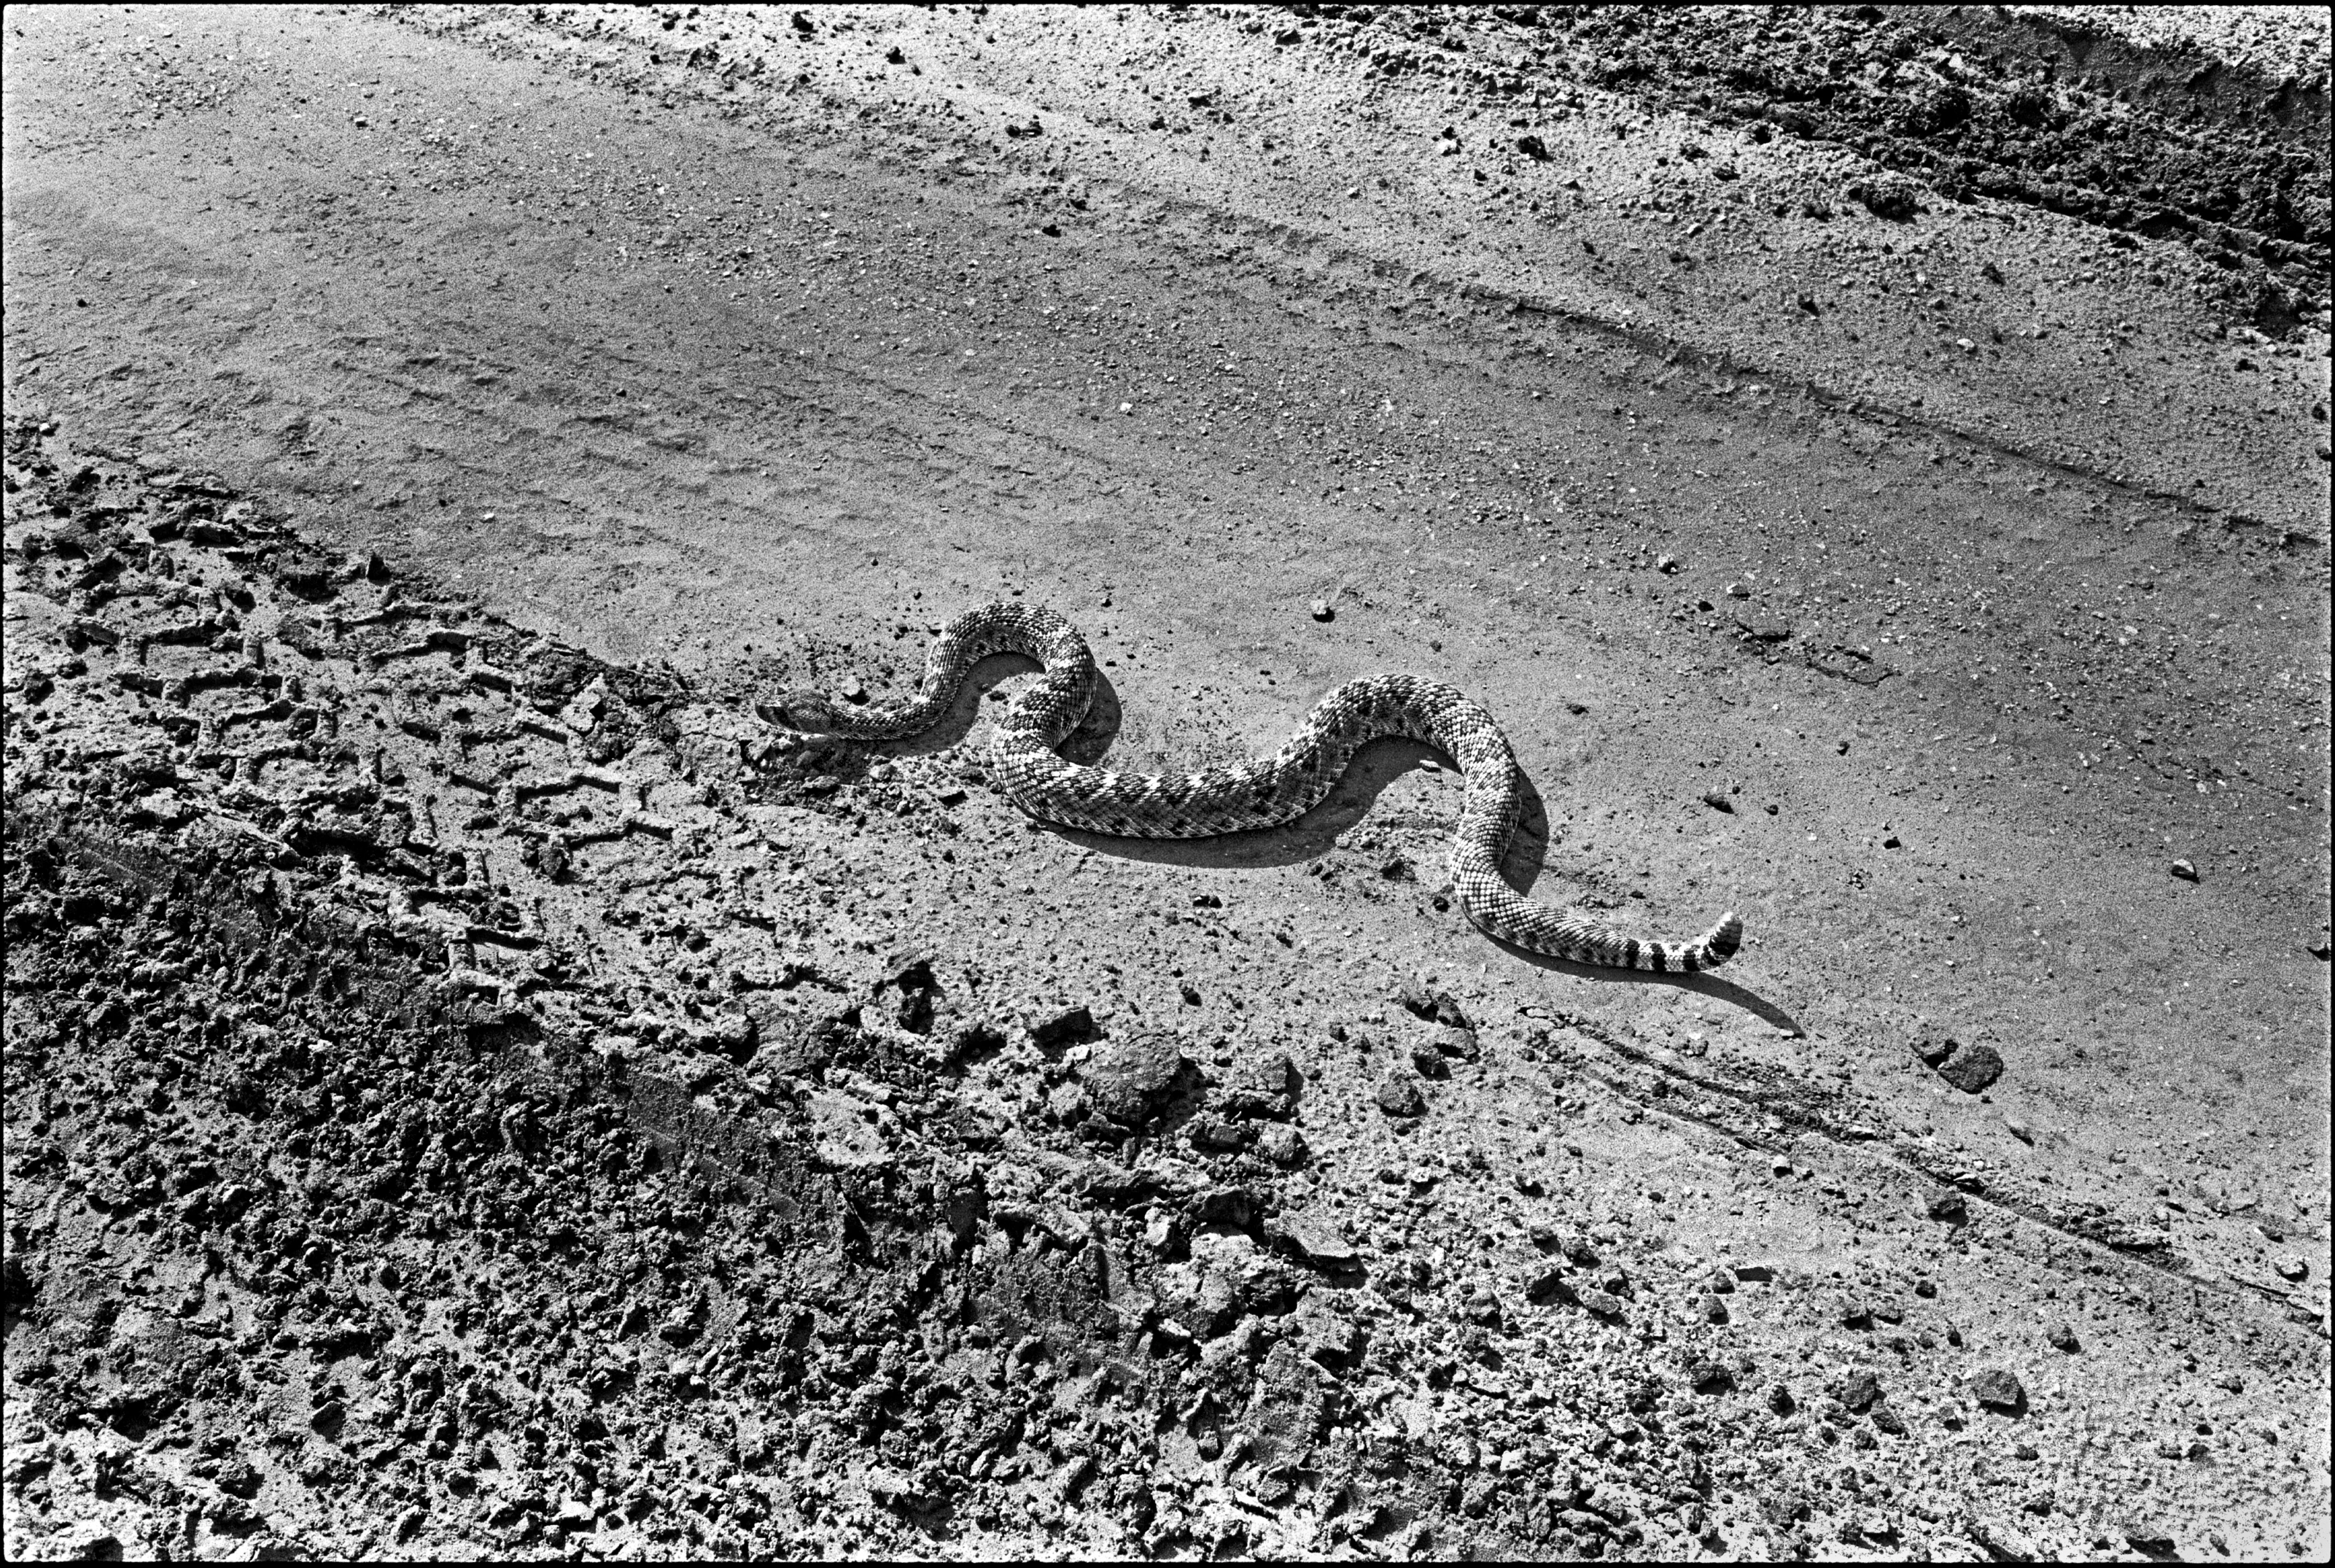 Rattlesnake, Zapata County, Texas, 1994